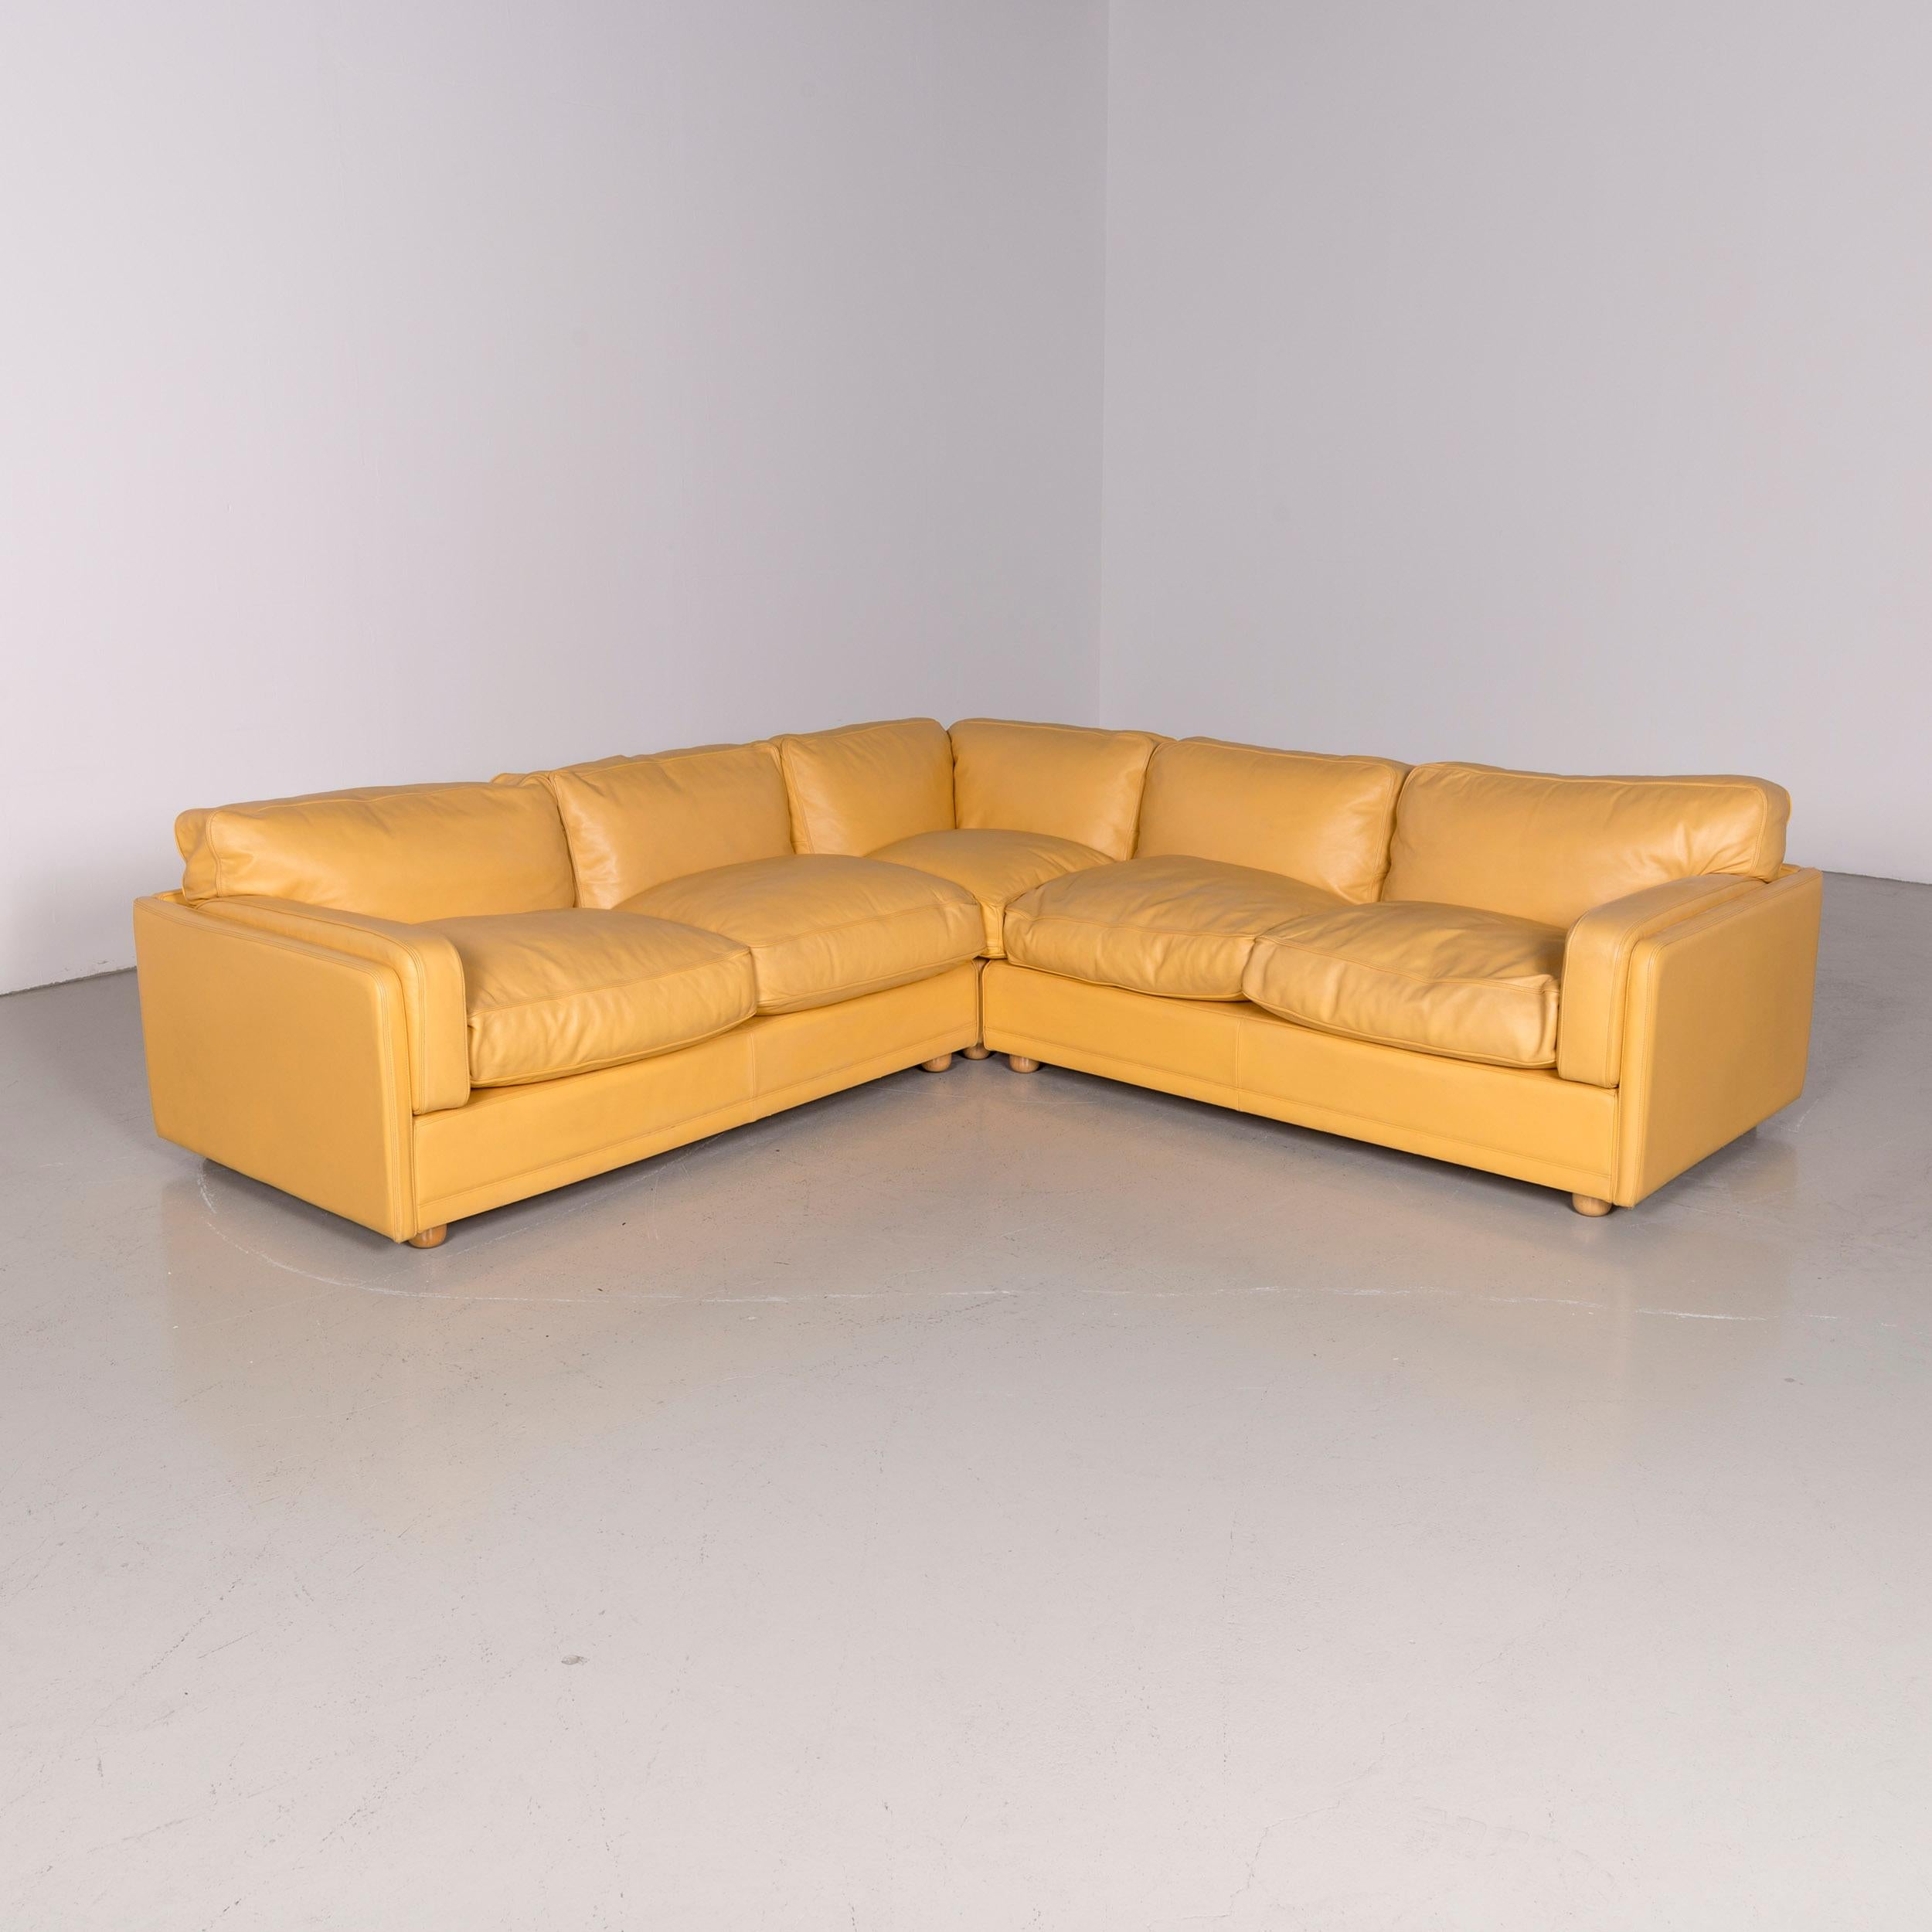 Poltrona Frau designer leather corner couch sofa yellow.